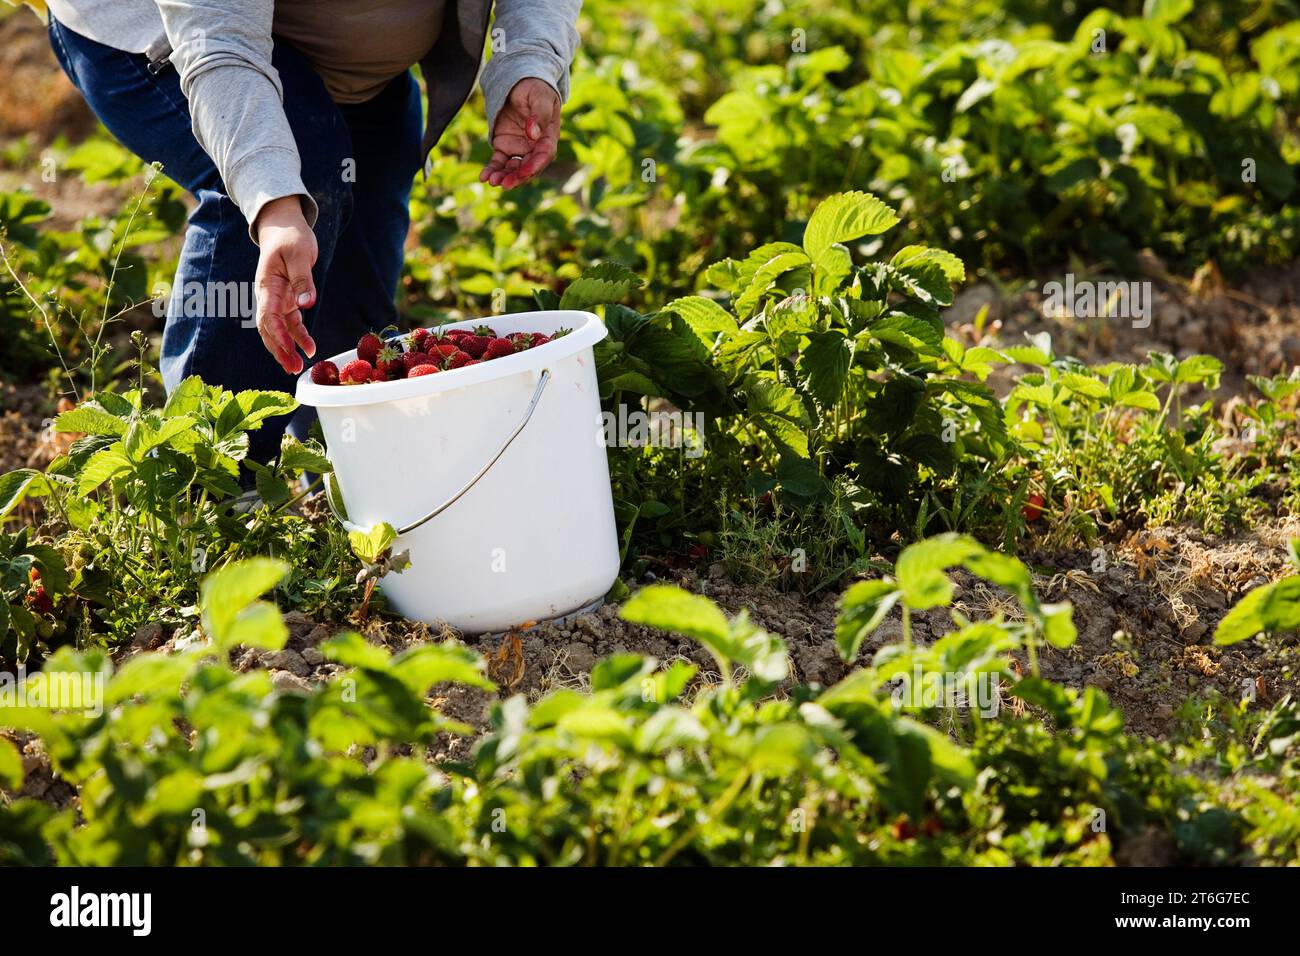 A woman picks strawberries. Stock Photo